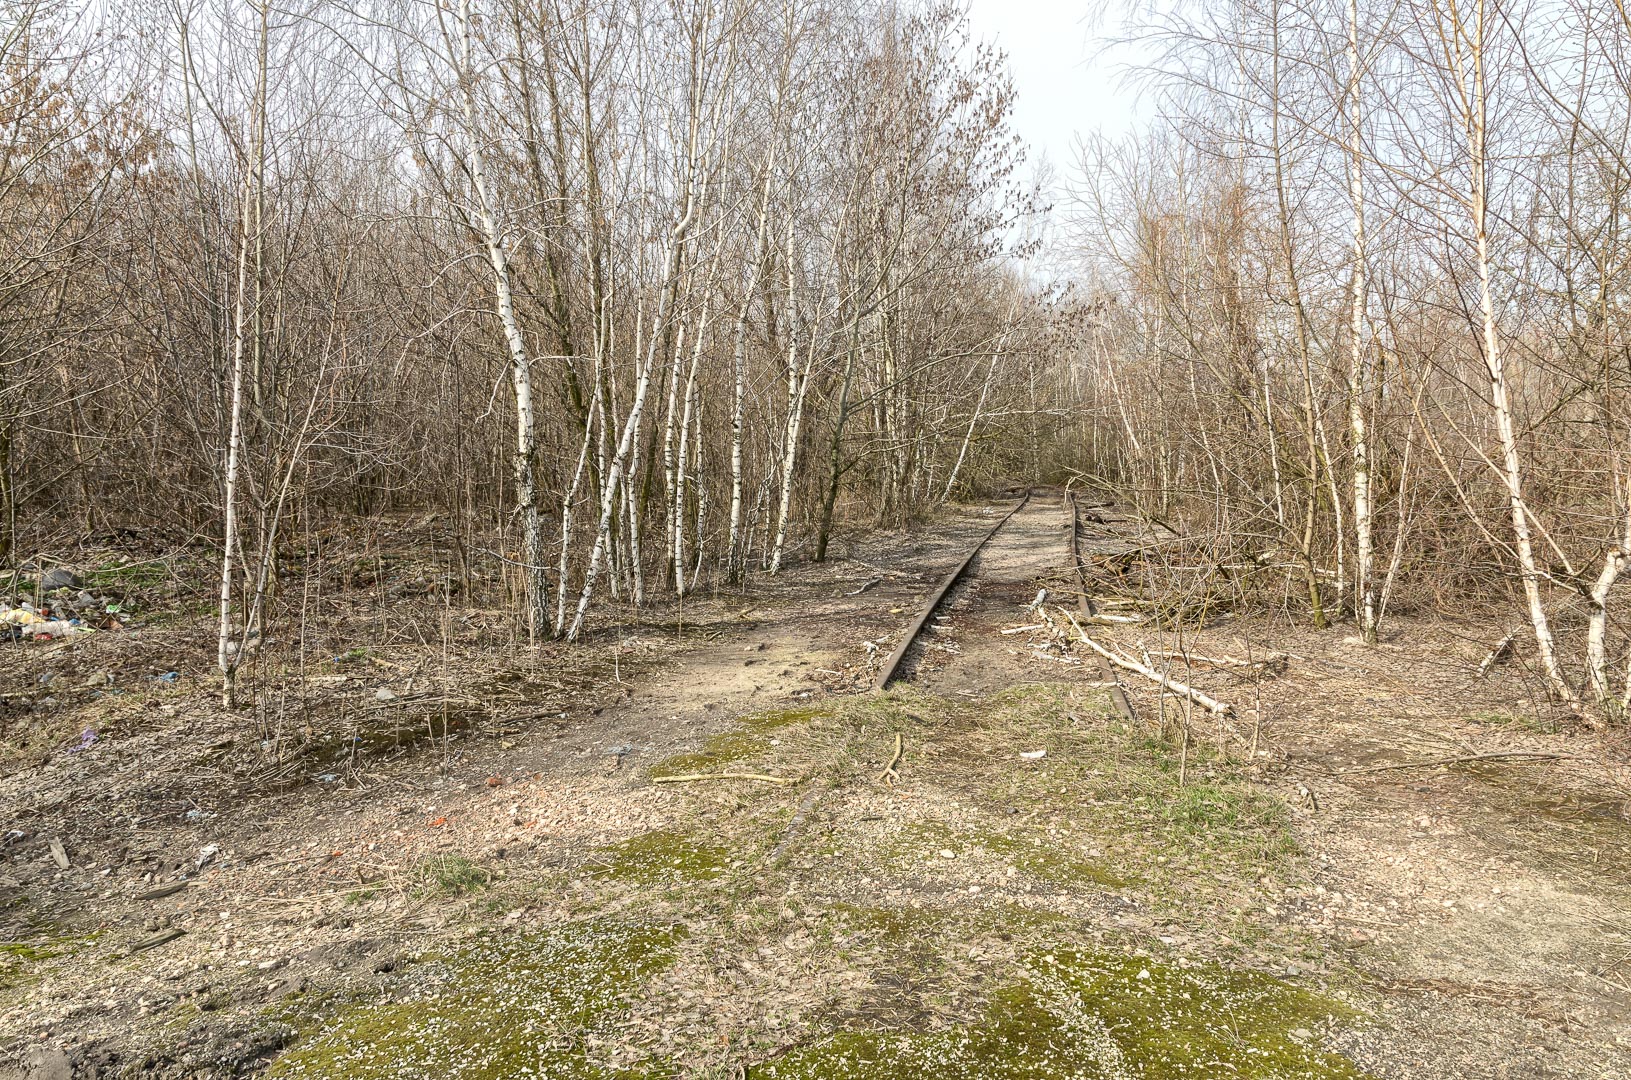 Backplate • ID: 11169 • HDRI Haven - Barren Terrain By Old Railway Track